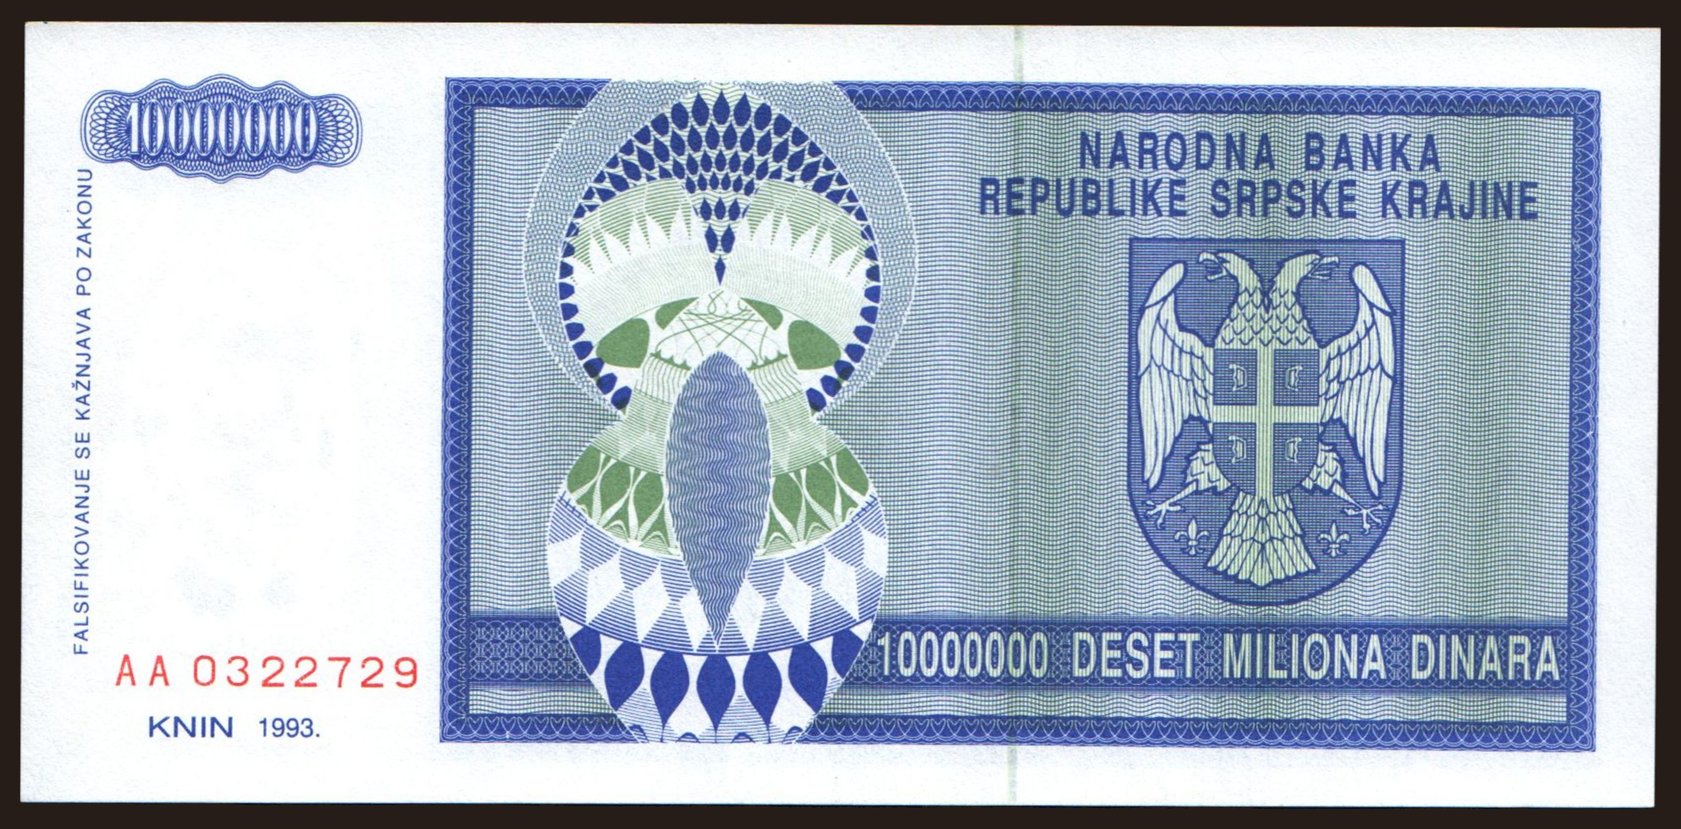 RSK, 10.000.000 dinara, 1993